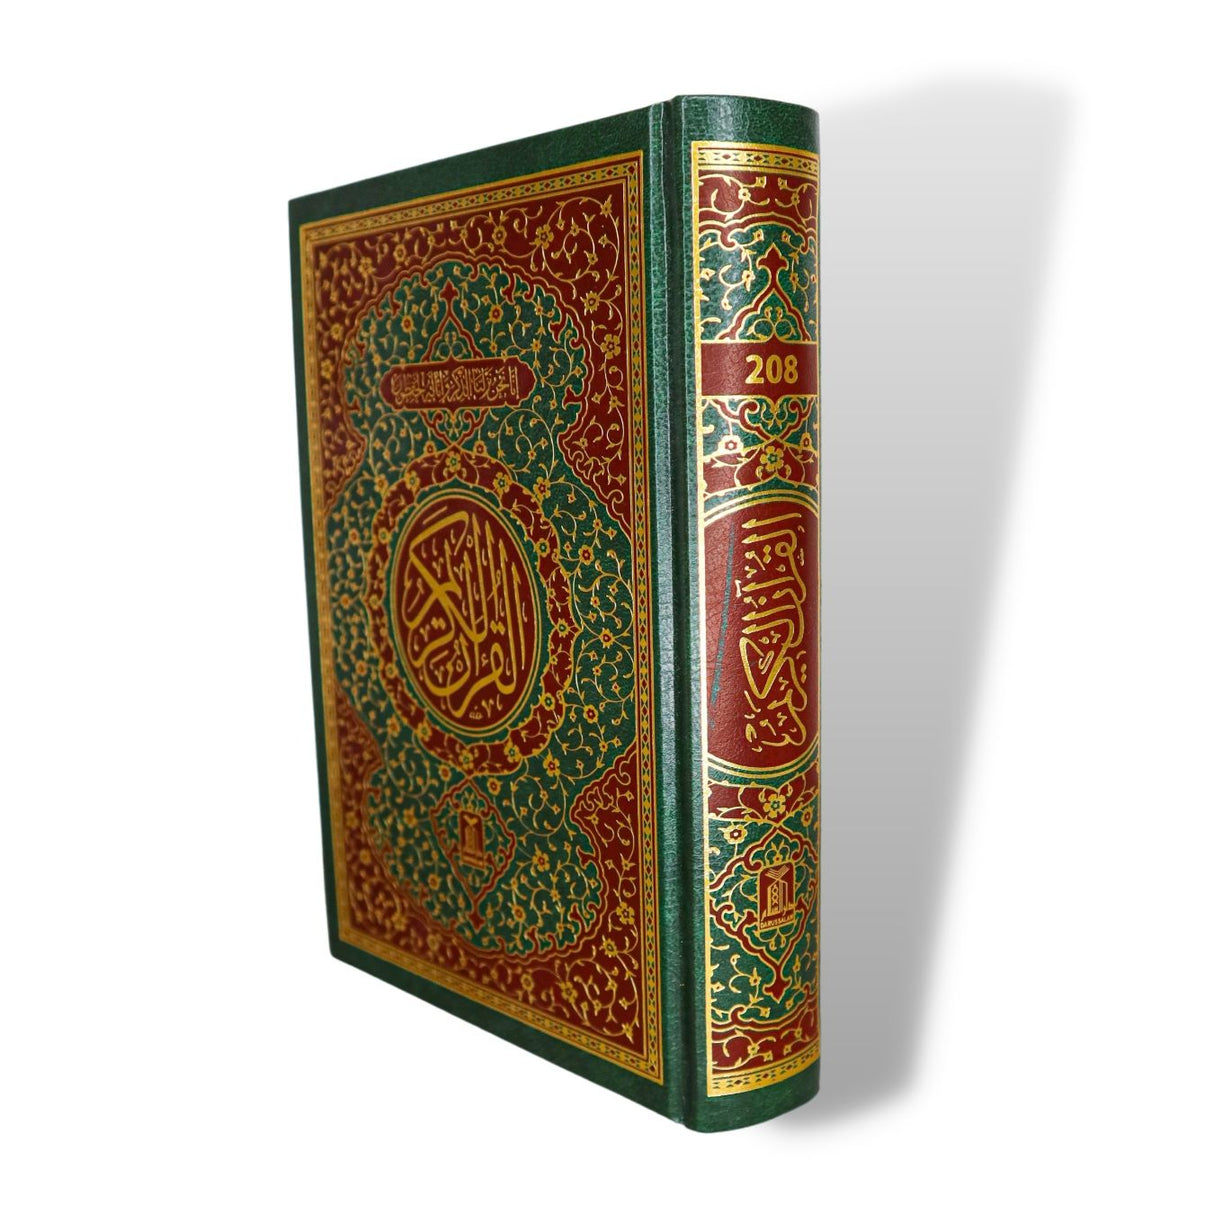 Al Quran ( A5 20 x 14cm x 3 cm ) 15 Lines Hafzi Darussalam ( Indo Pak Persian Script )